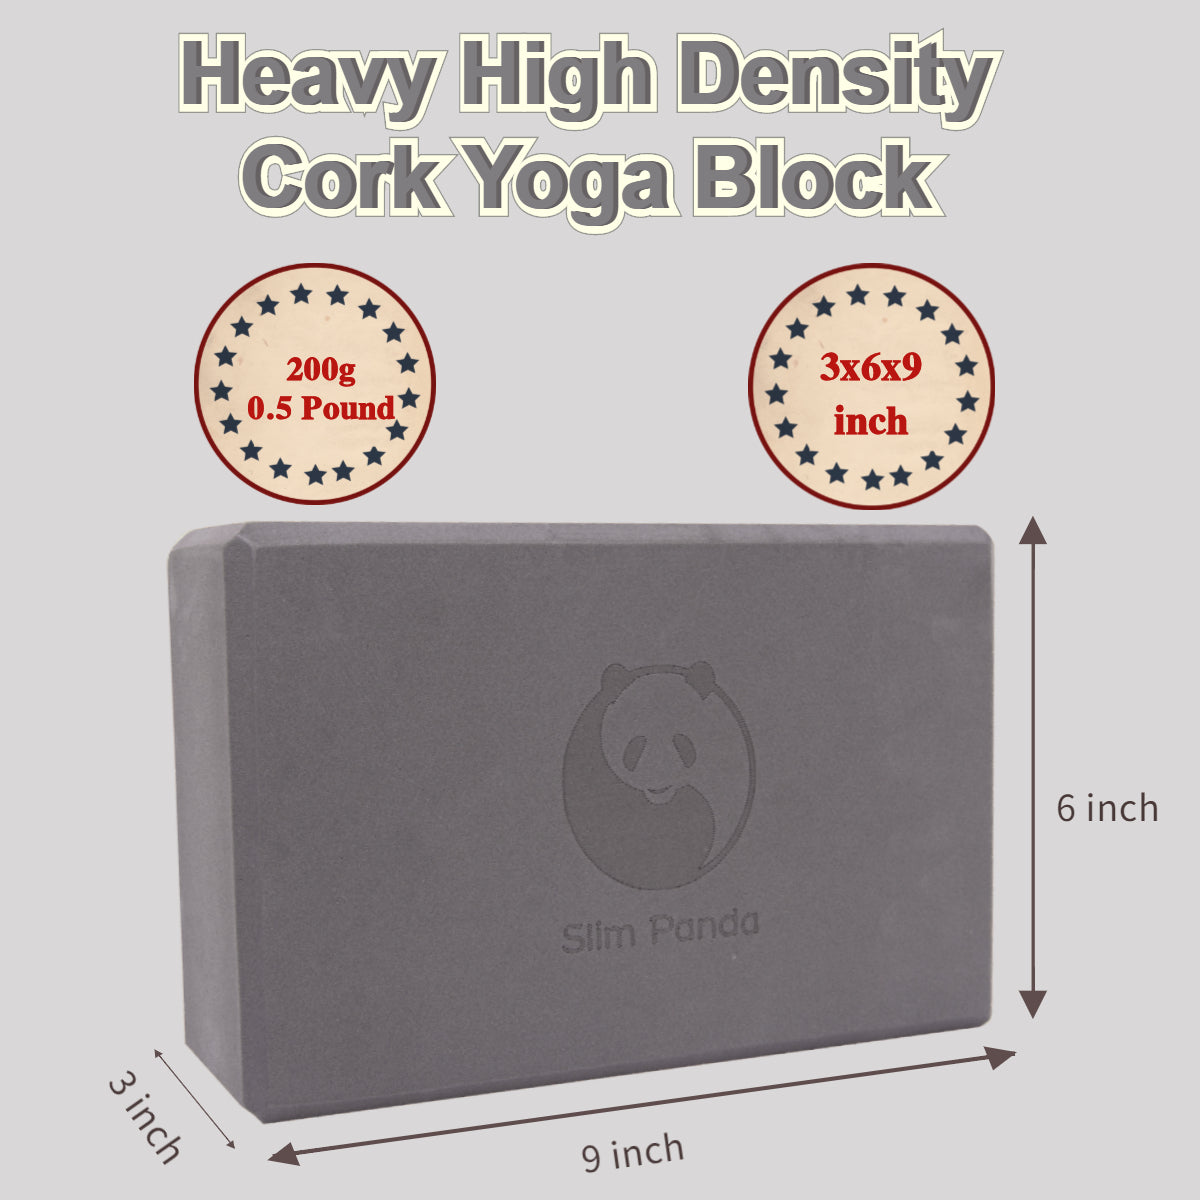 Slim Panda Yoga Blocks, 3x6x9 inch -2 Pcs With Cover Bag